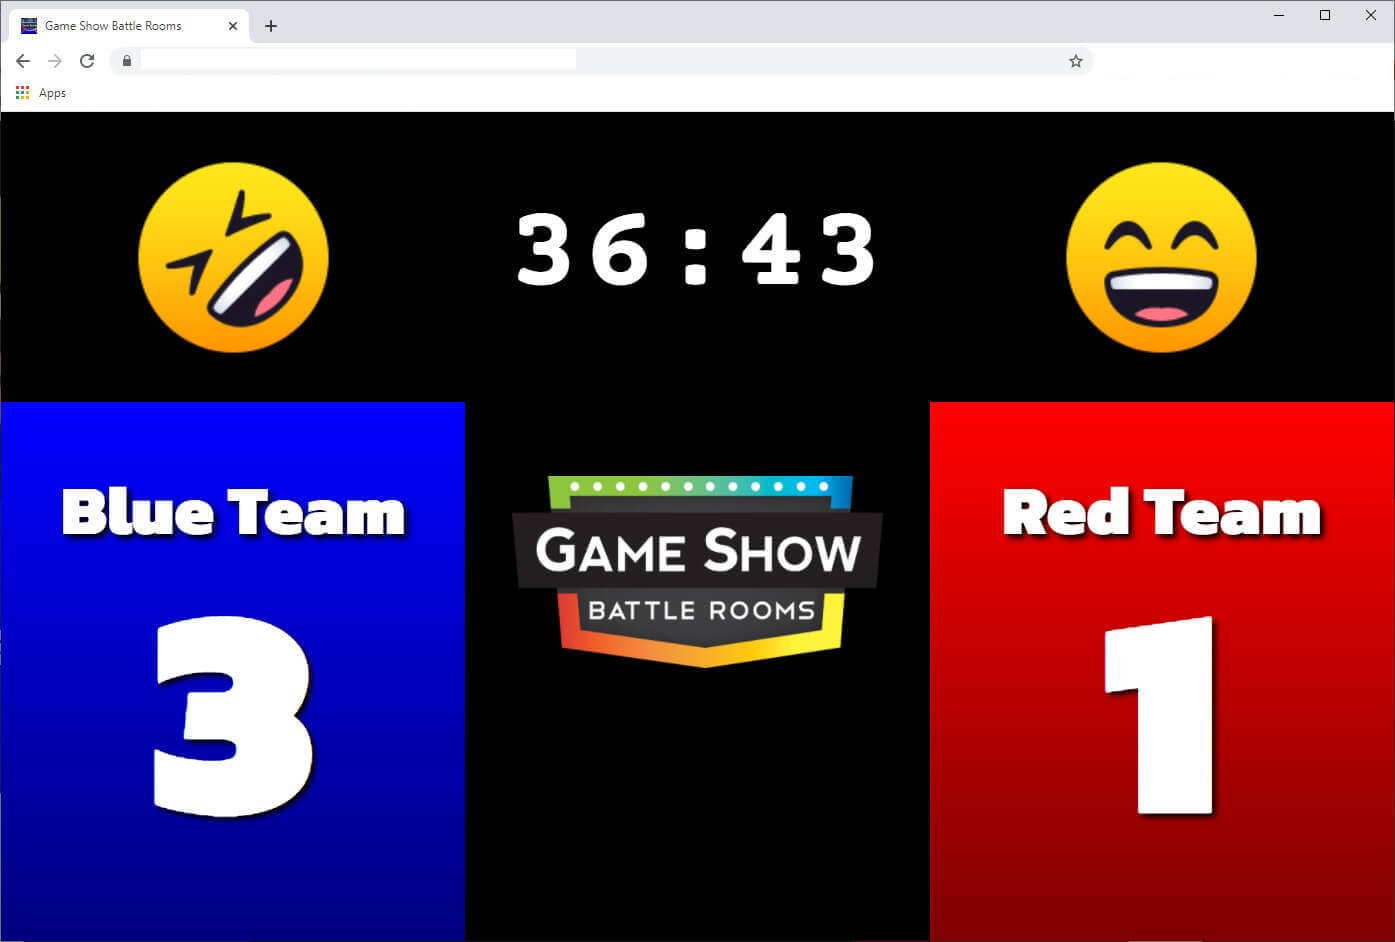 gsbr-scoreboard-browser-edited.jpg